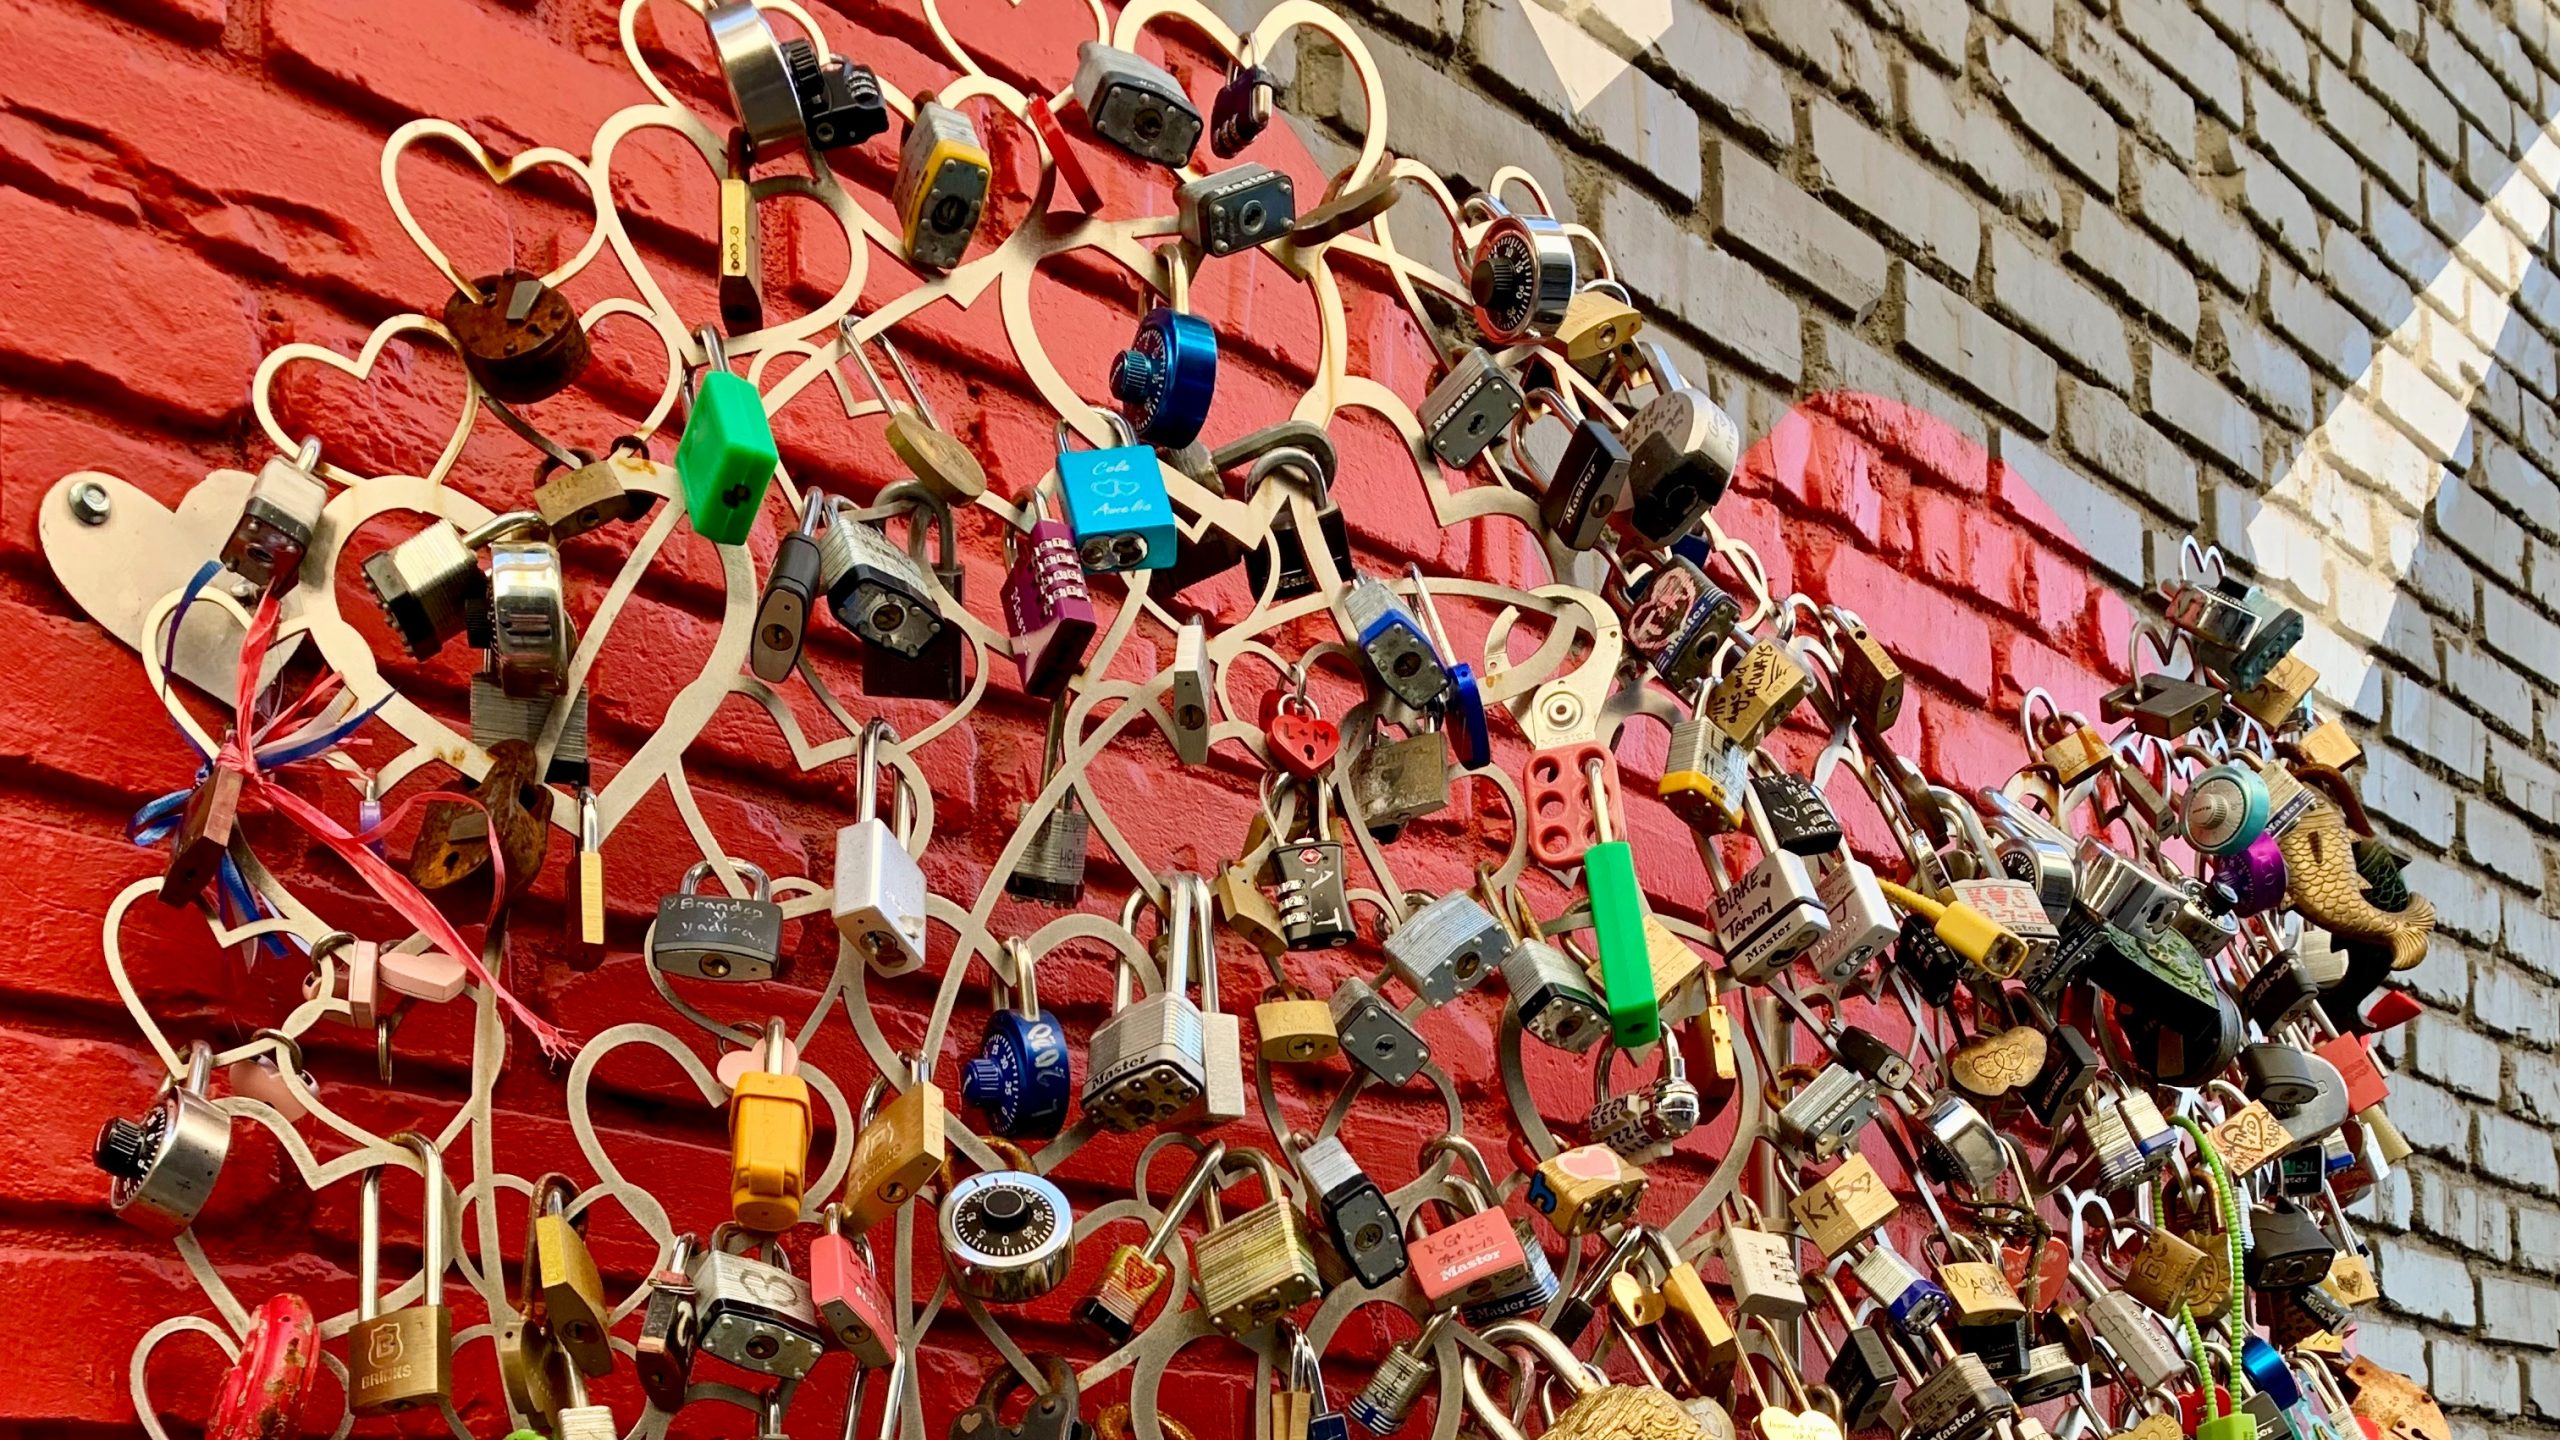 Public art with locks in Overton Square